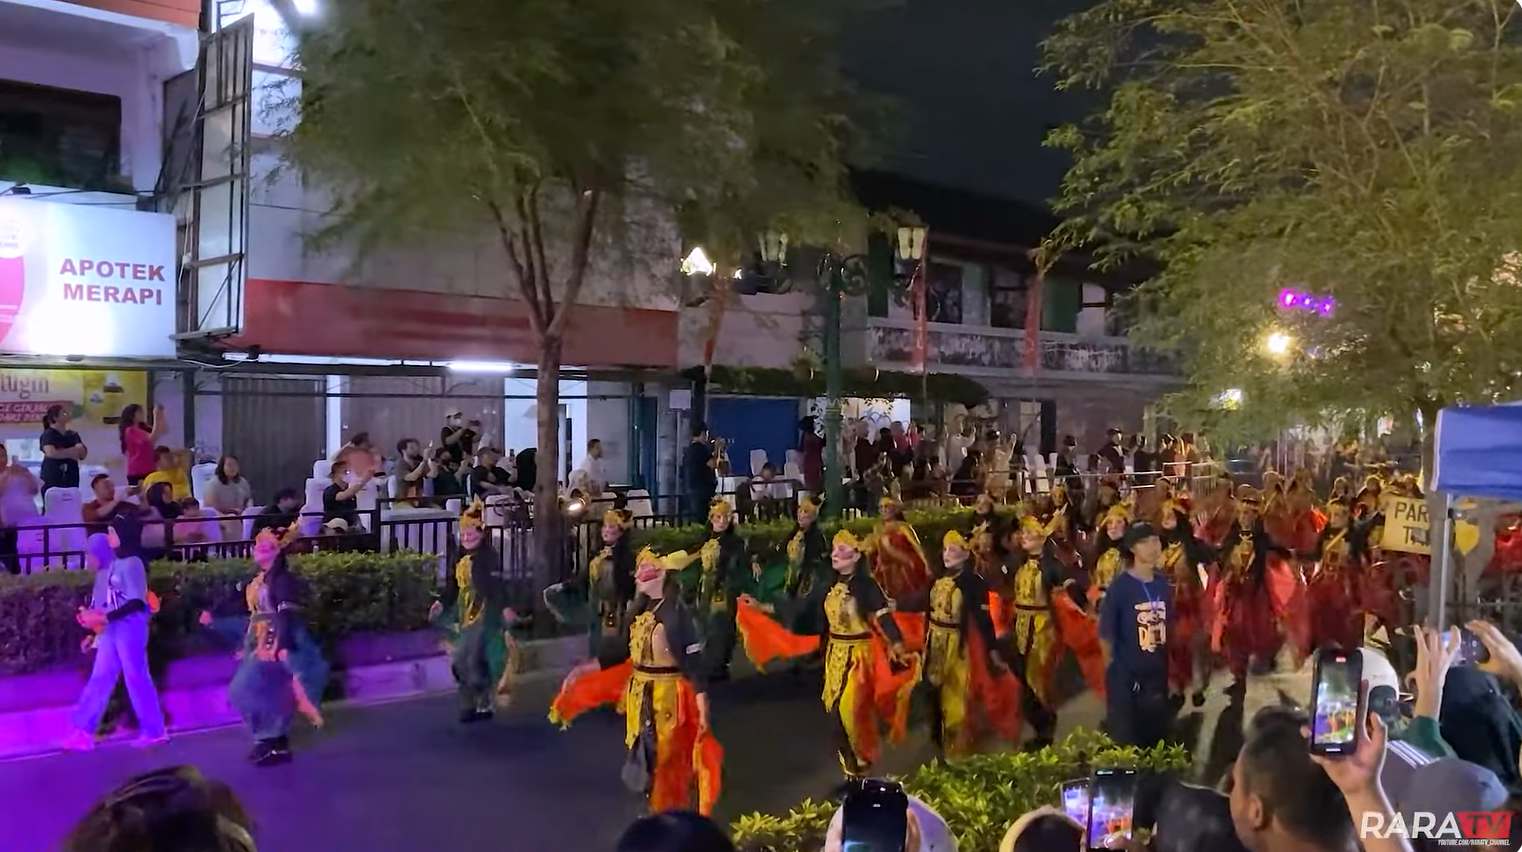 Pesta Spektakuler Wayang Jogja Night Carnival #8: Mengenang HUT ke-267 Kota Yogyakarta